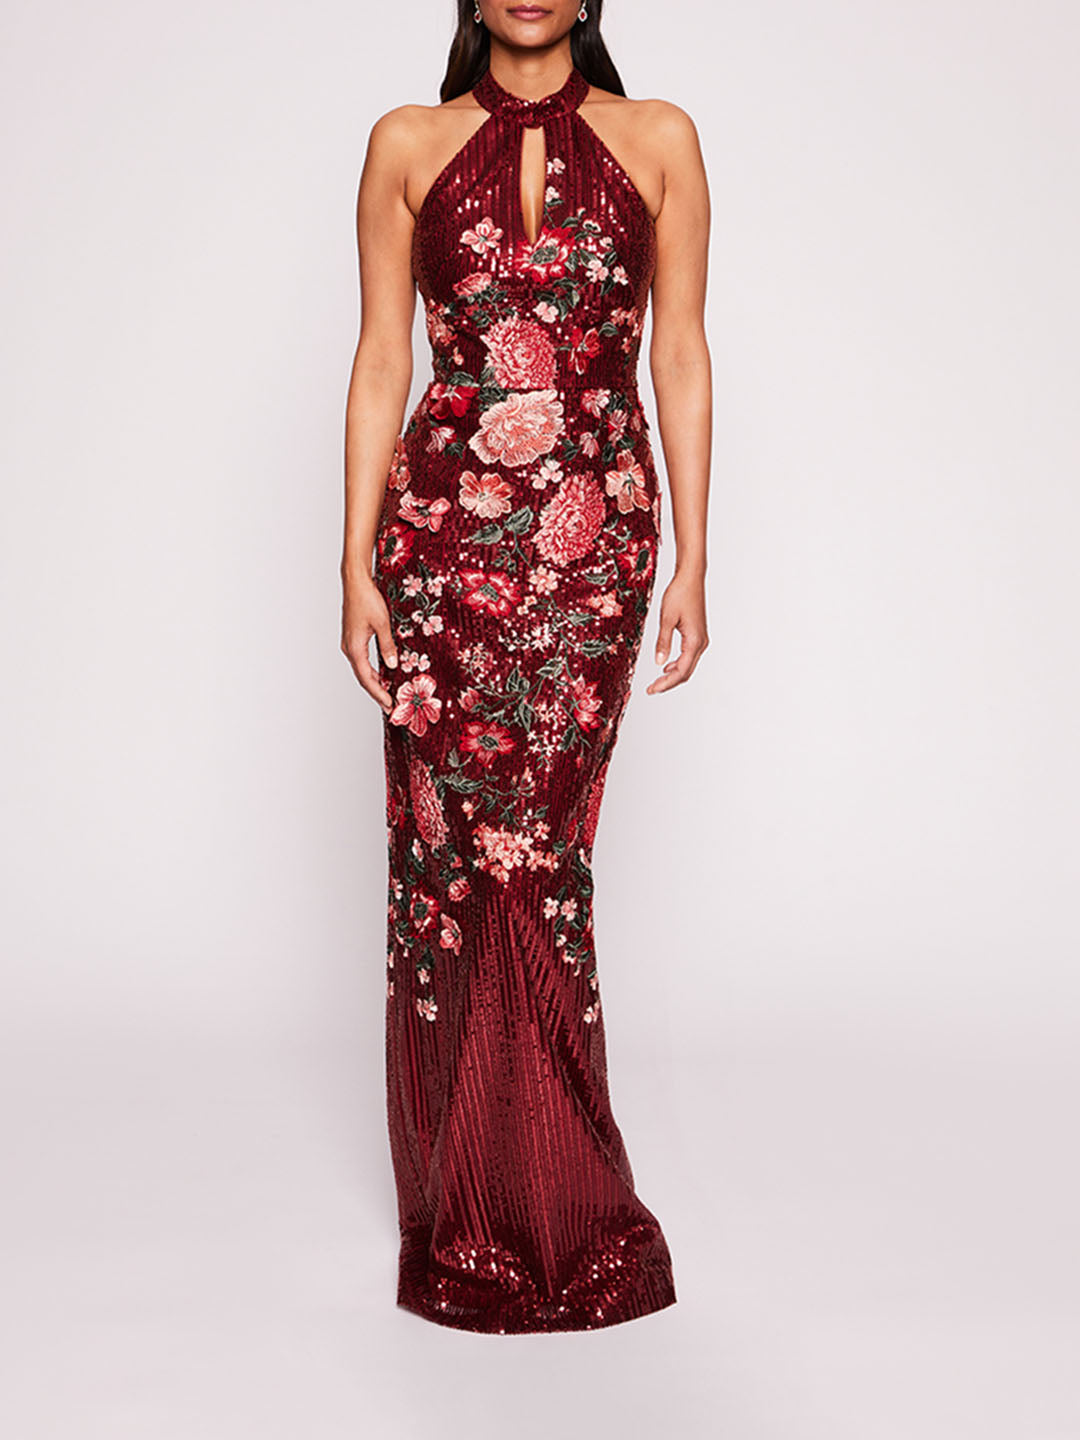 $4995 NEW Marchesa Off the Shoulder Appliquéd Velvet Gown Burgundy Dress 4